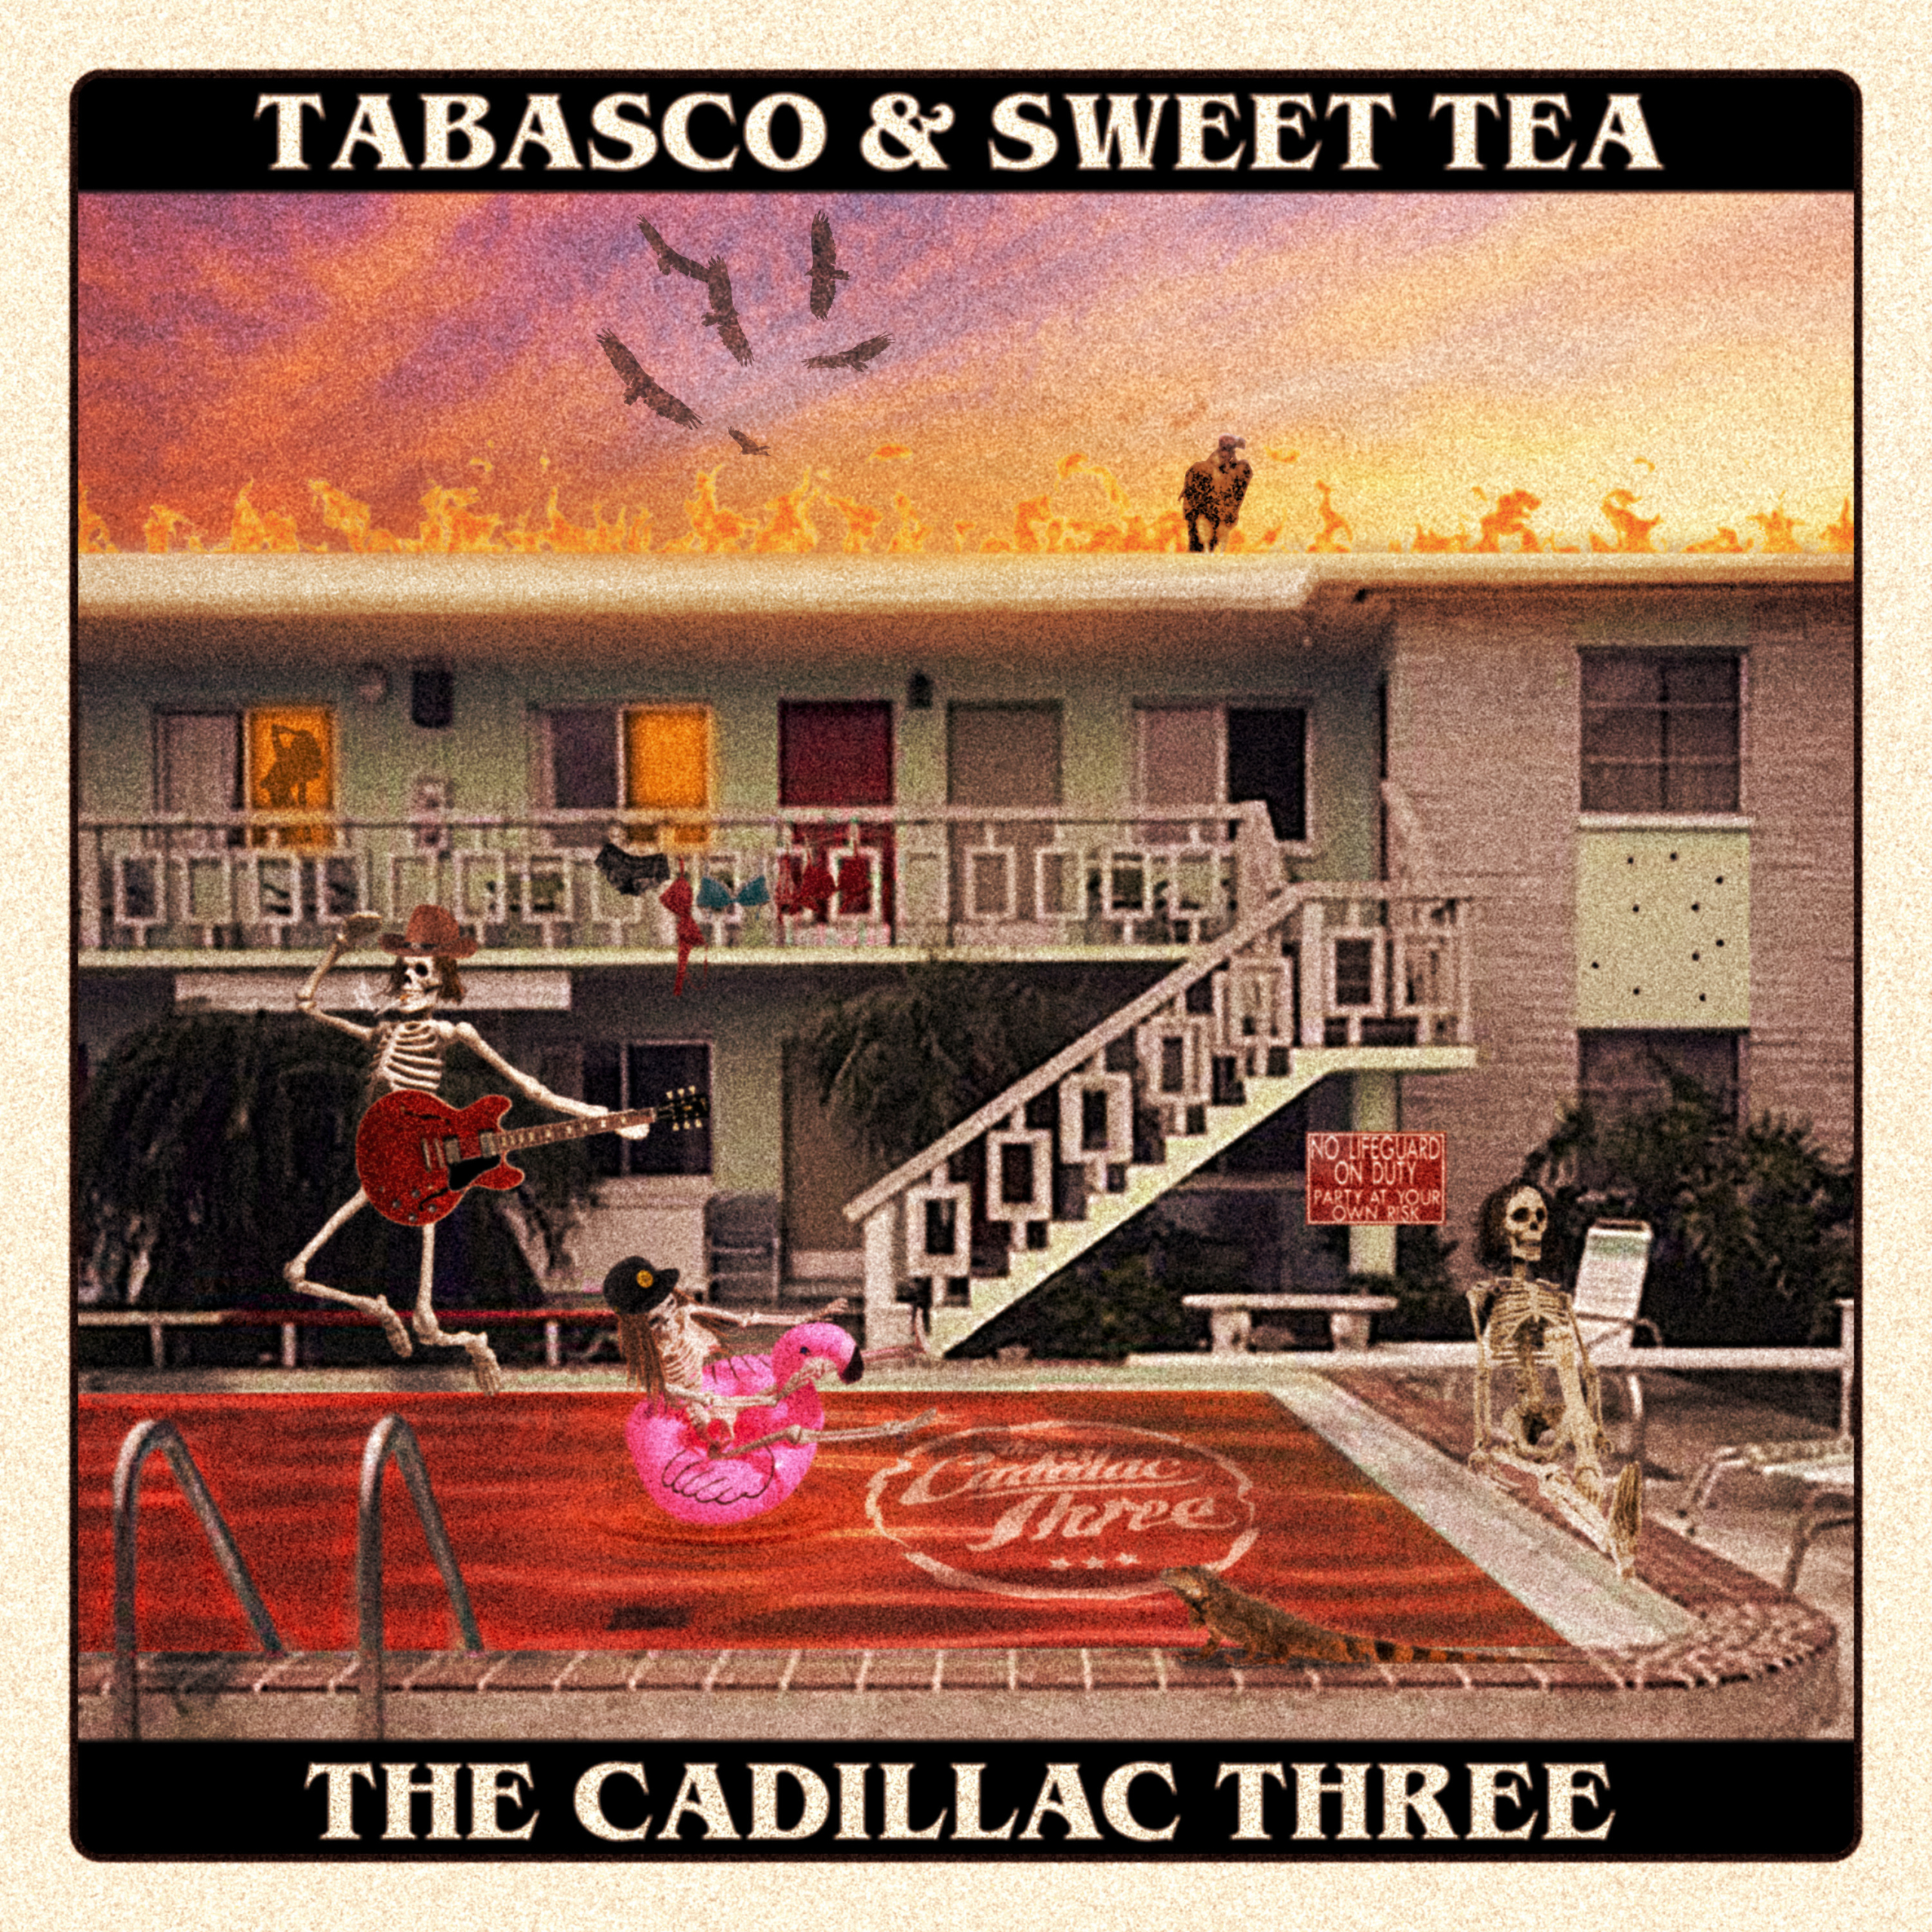 The Cadillac Three new album TABASCO & SWEET TEA